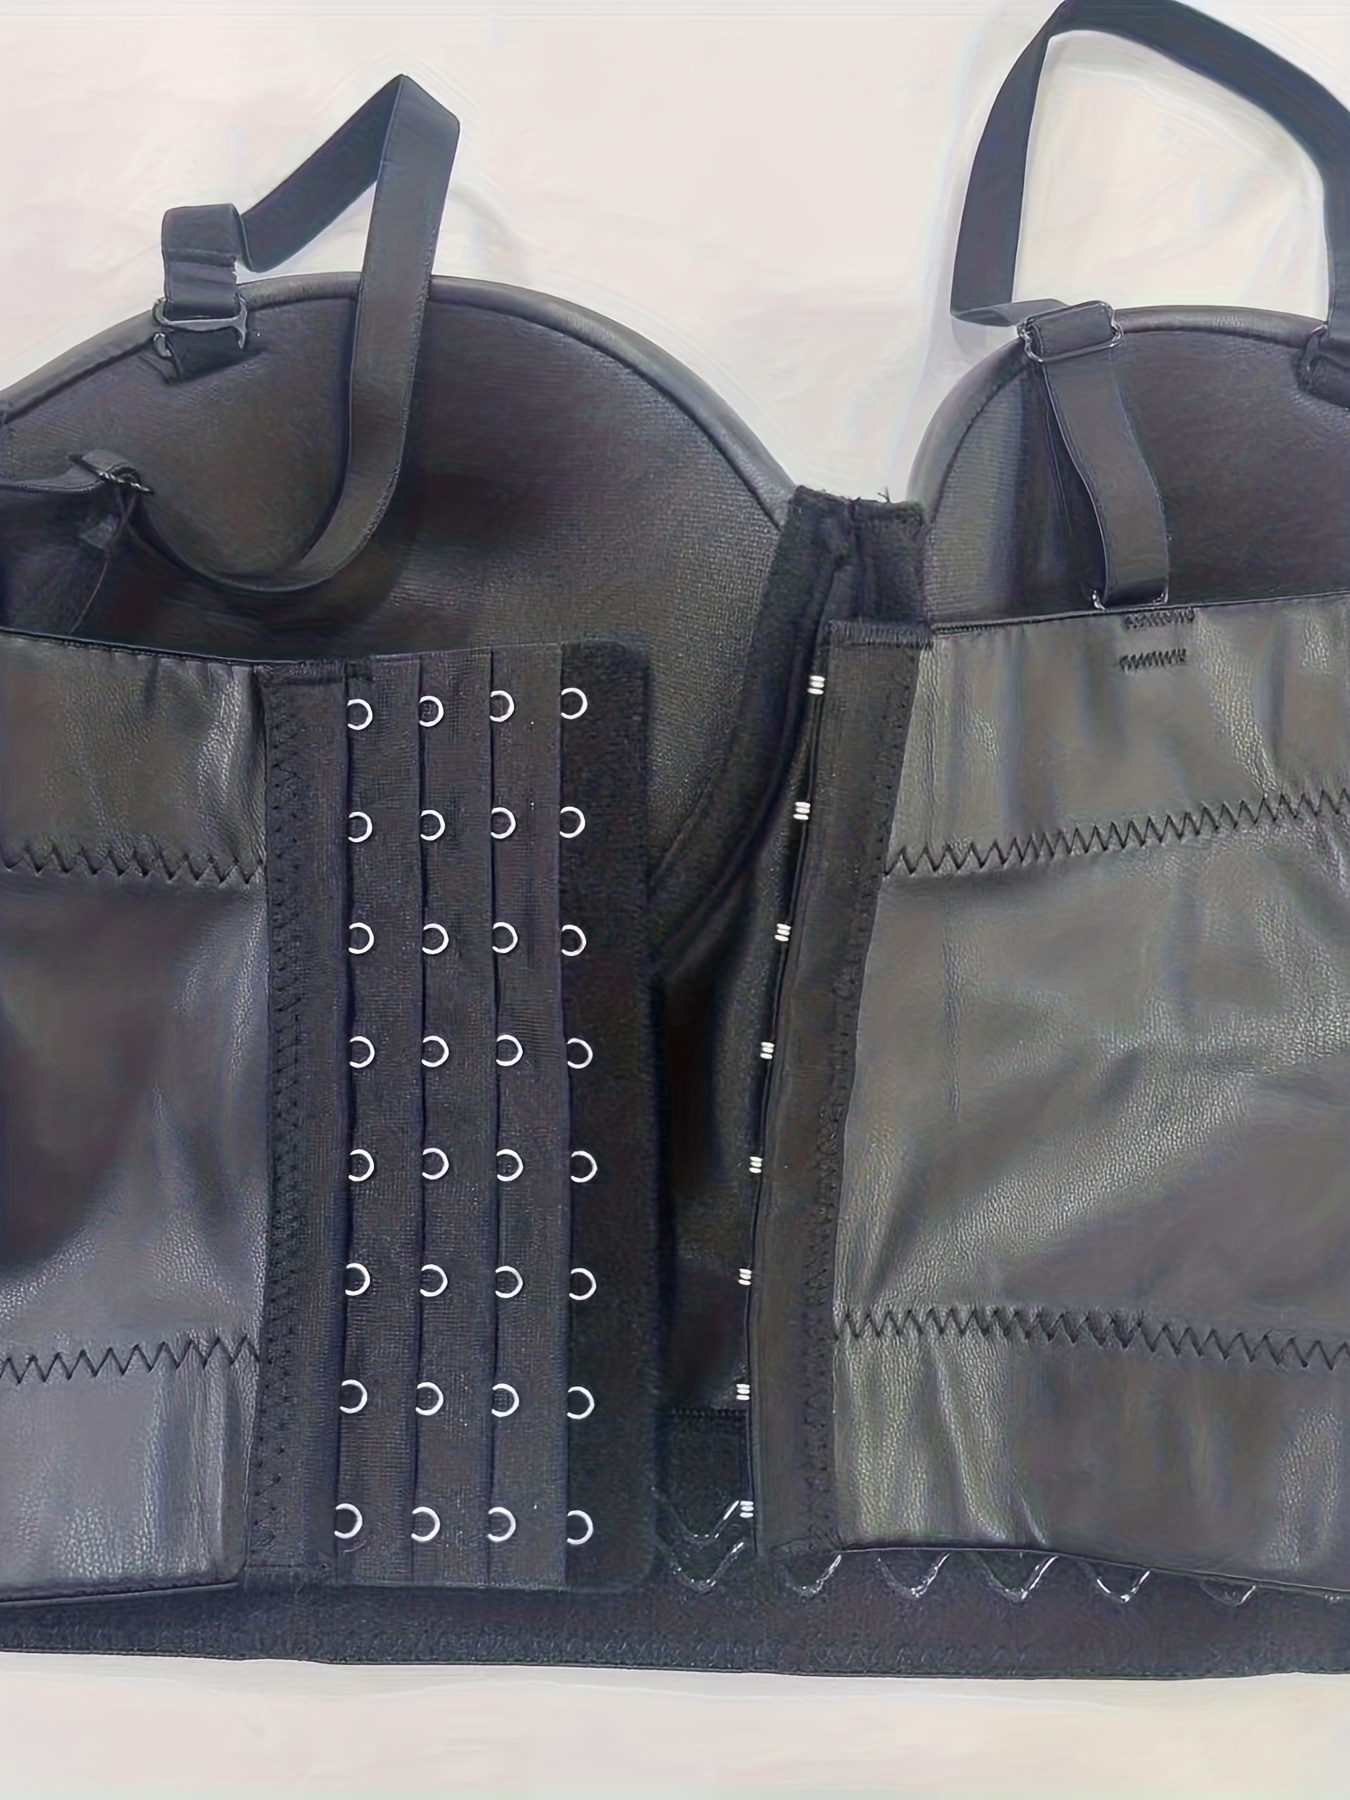 Xtreme Bra push up underbust corsette - . Gift Ideas